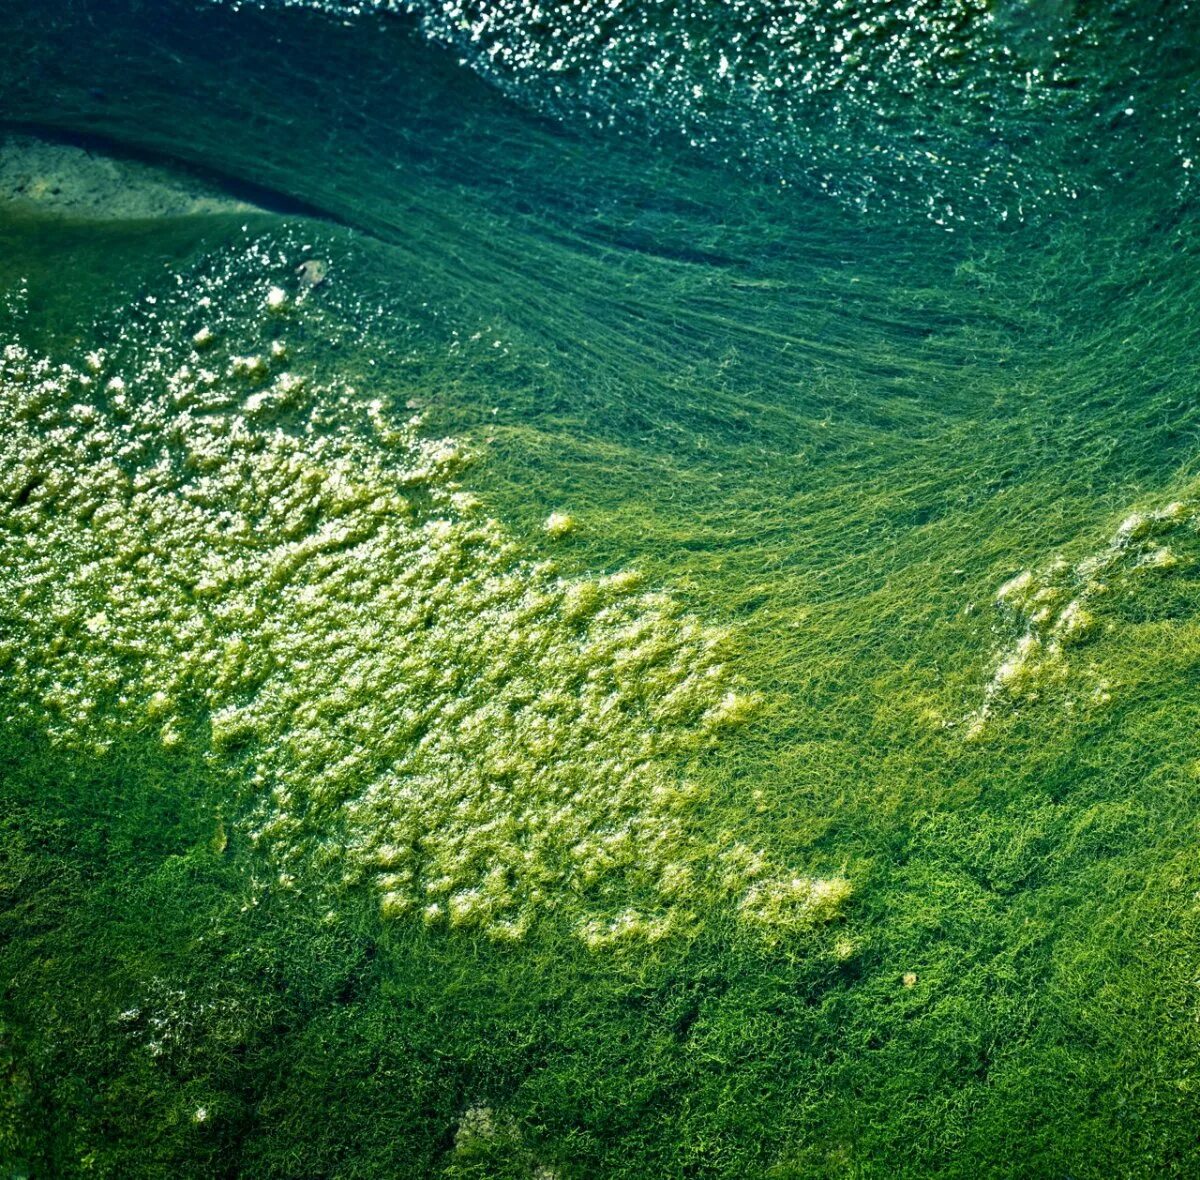 Цветущие водоросли. Цианобактерии водоросли. Фитопланктон зеленые водоросли. Цианеи водоросли. Синезелёные водоросли цианобактерии.